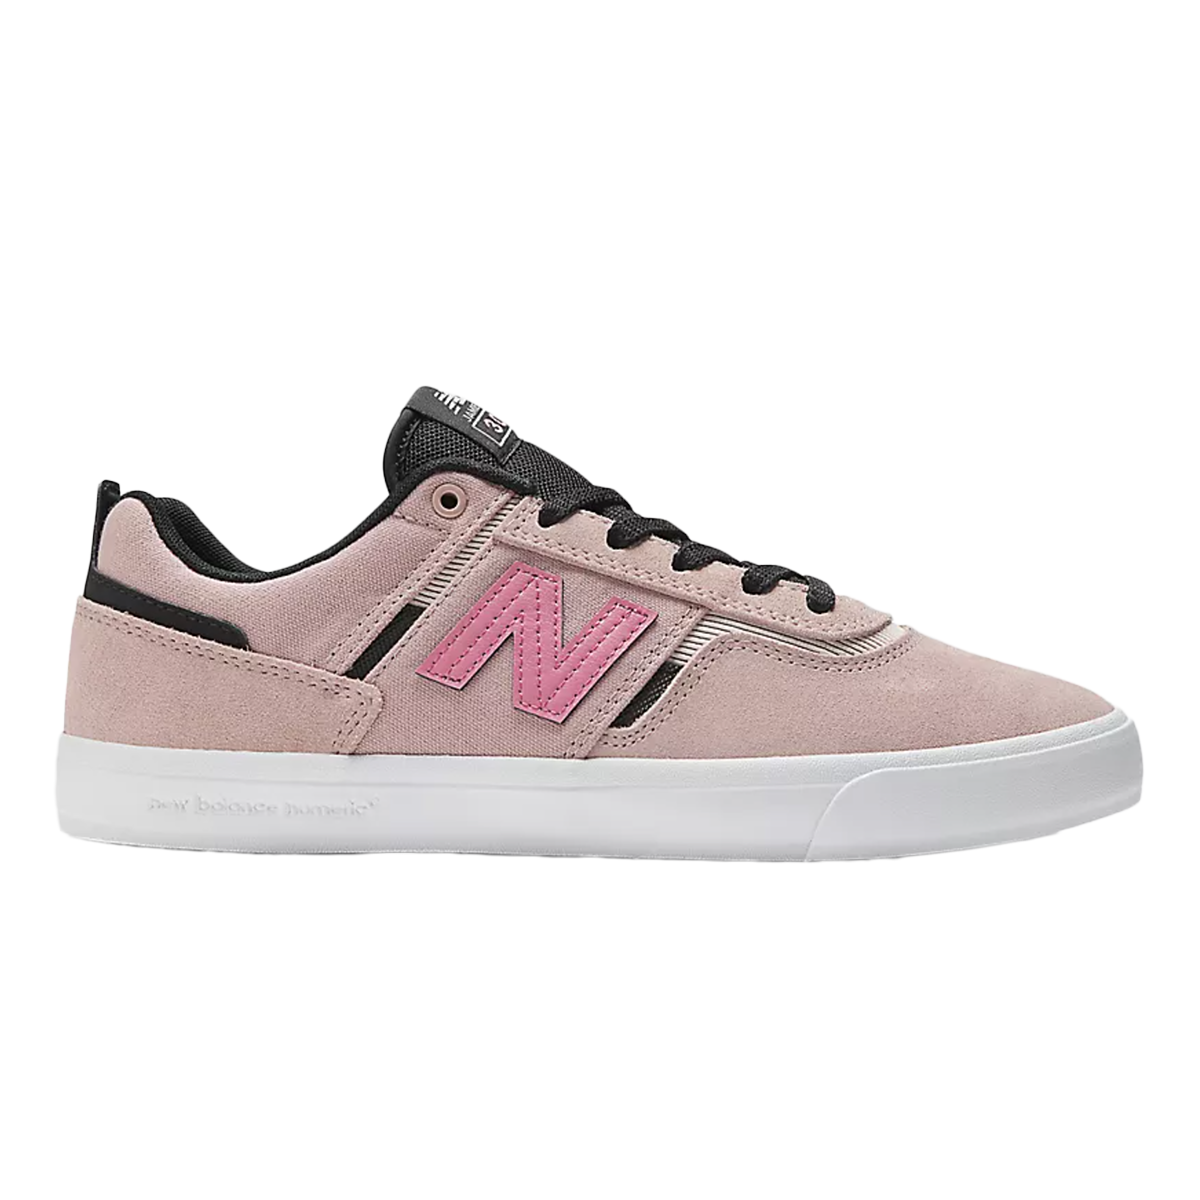 New Balance NM 306 Shoes - Pink/Black